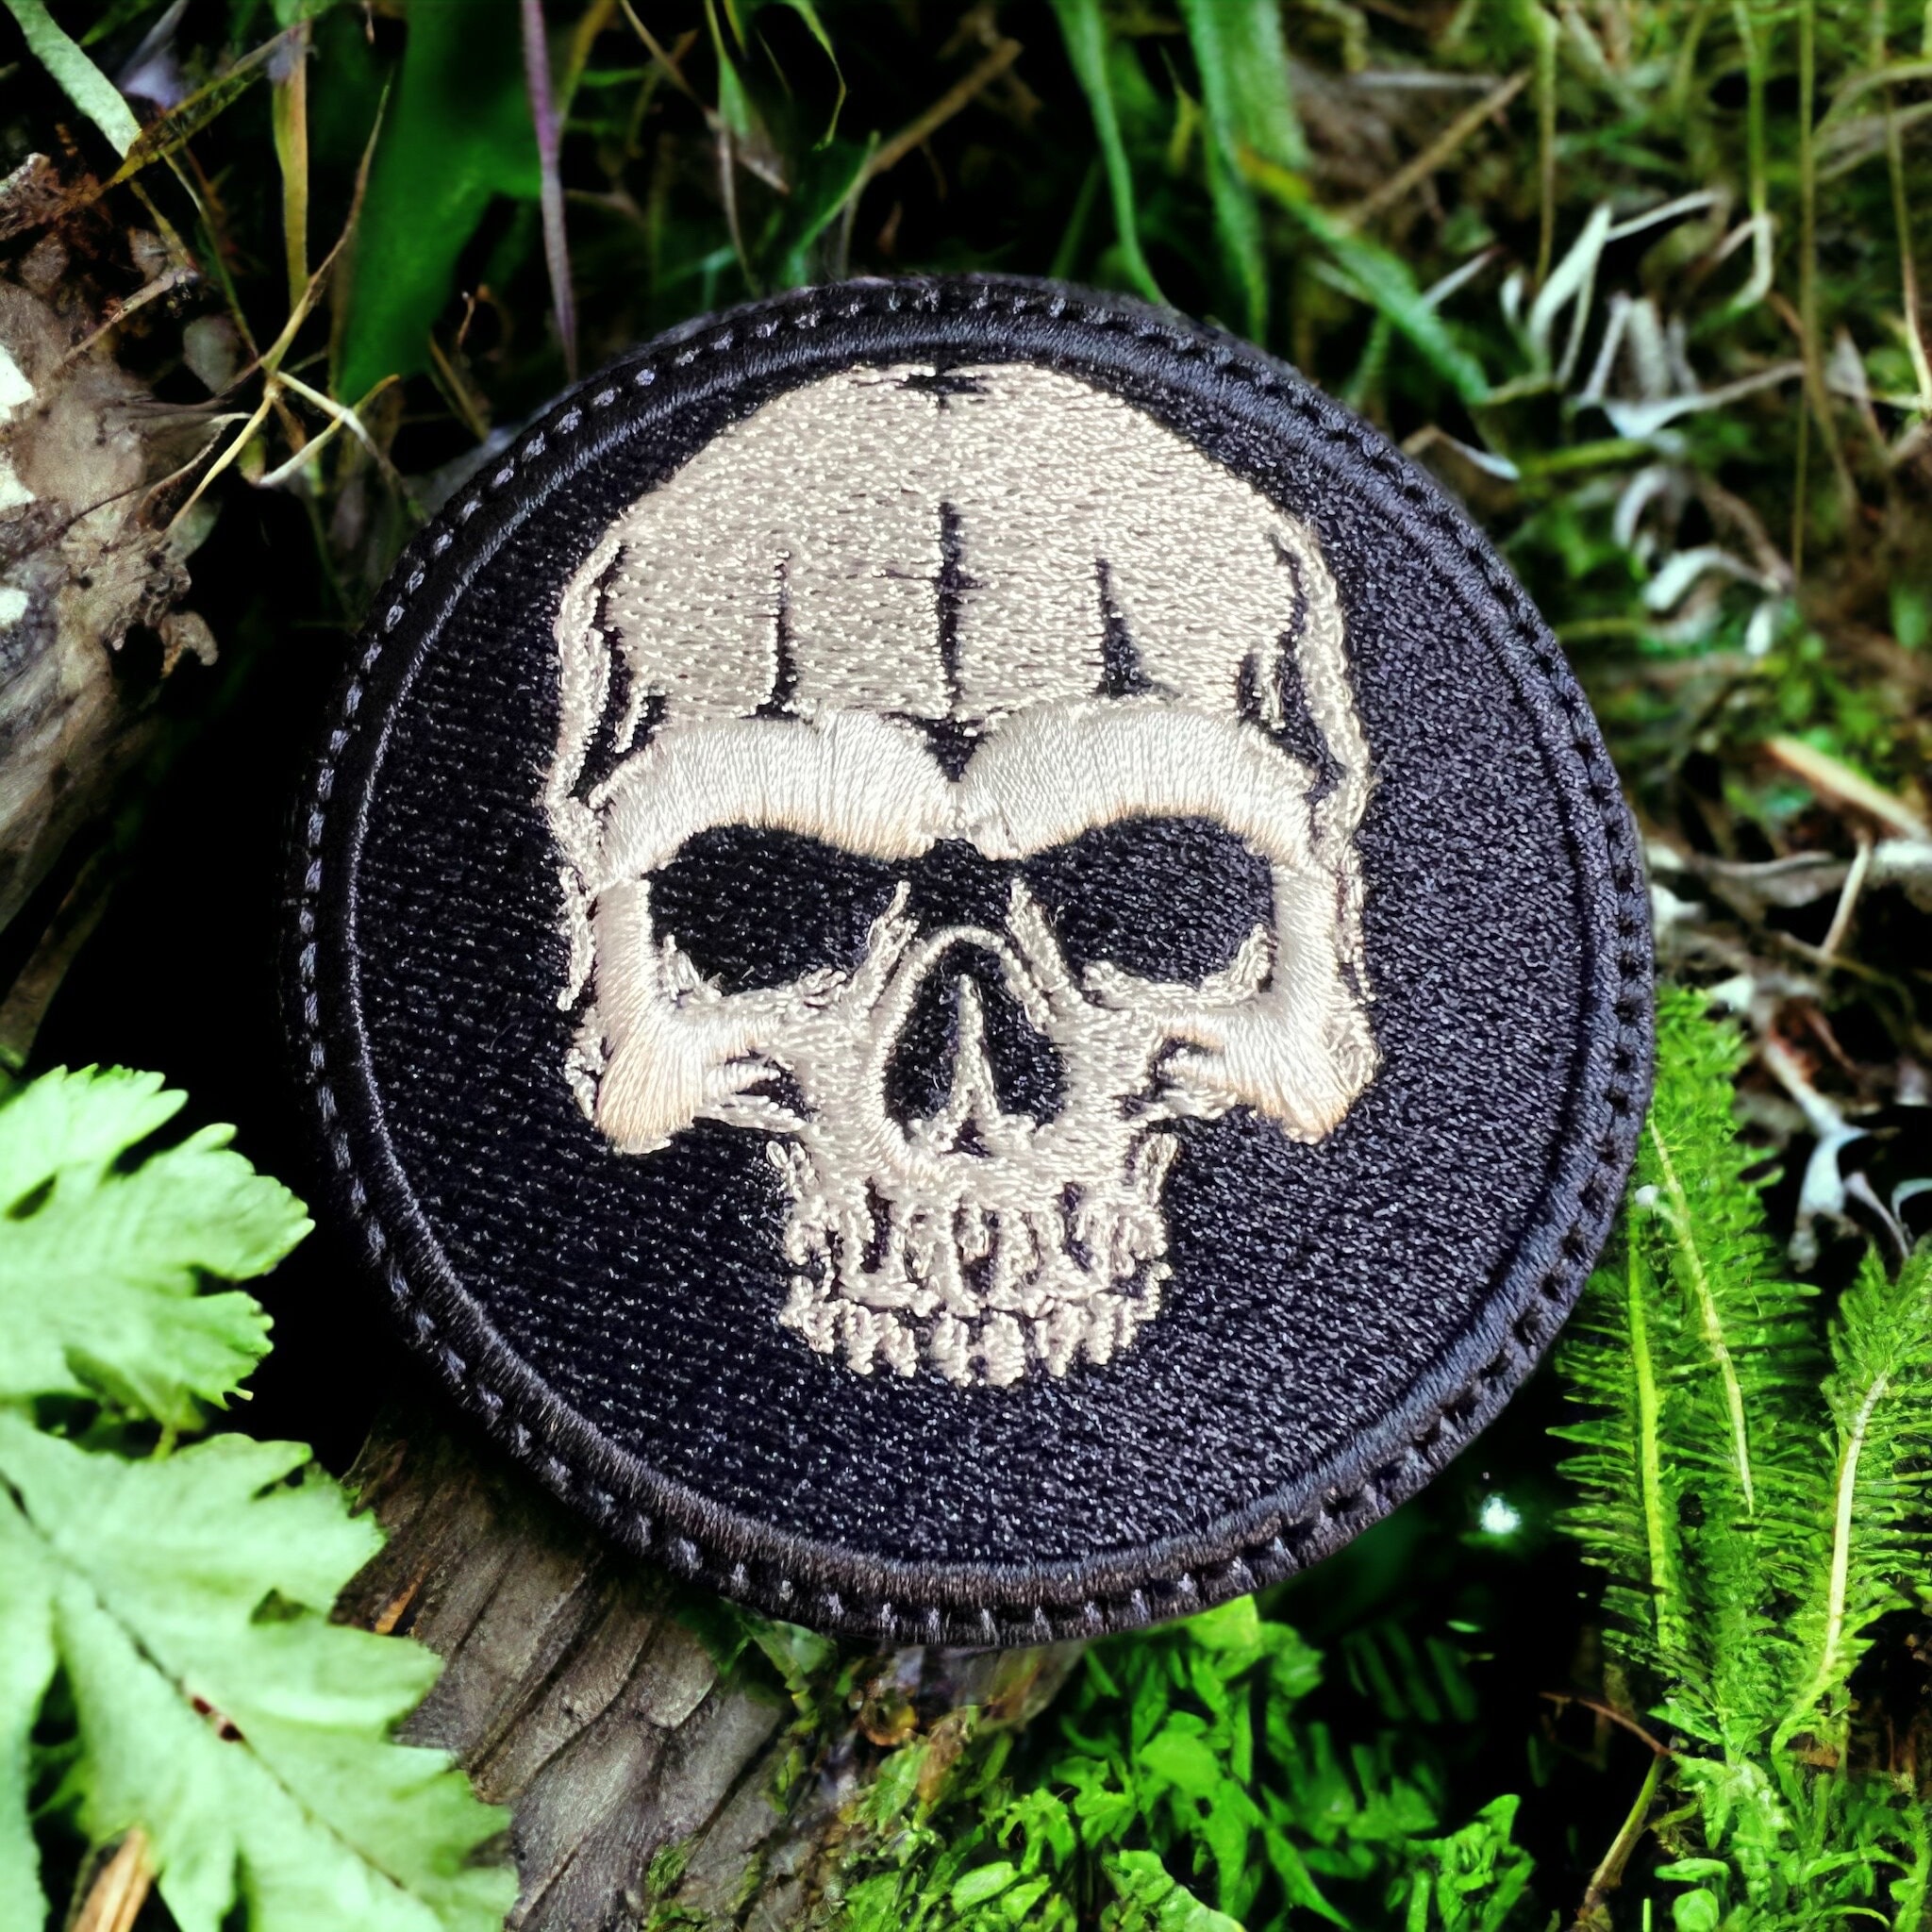 Skull Skelton Crossbones Bikers Rockers Pirate Fire Goth Iron Sew On Patch  Badge